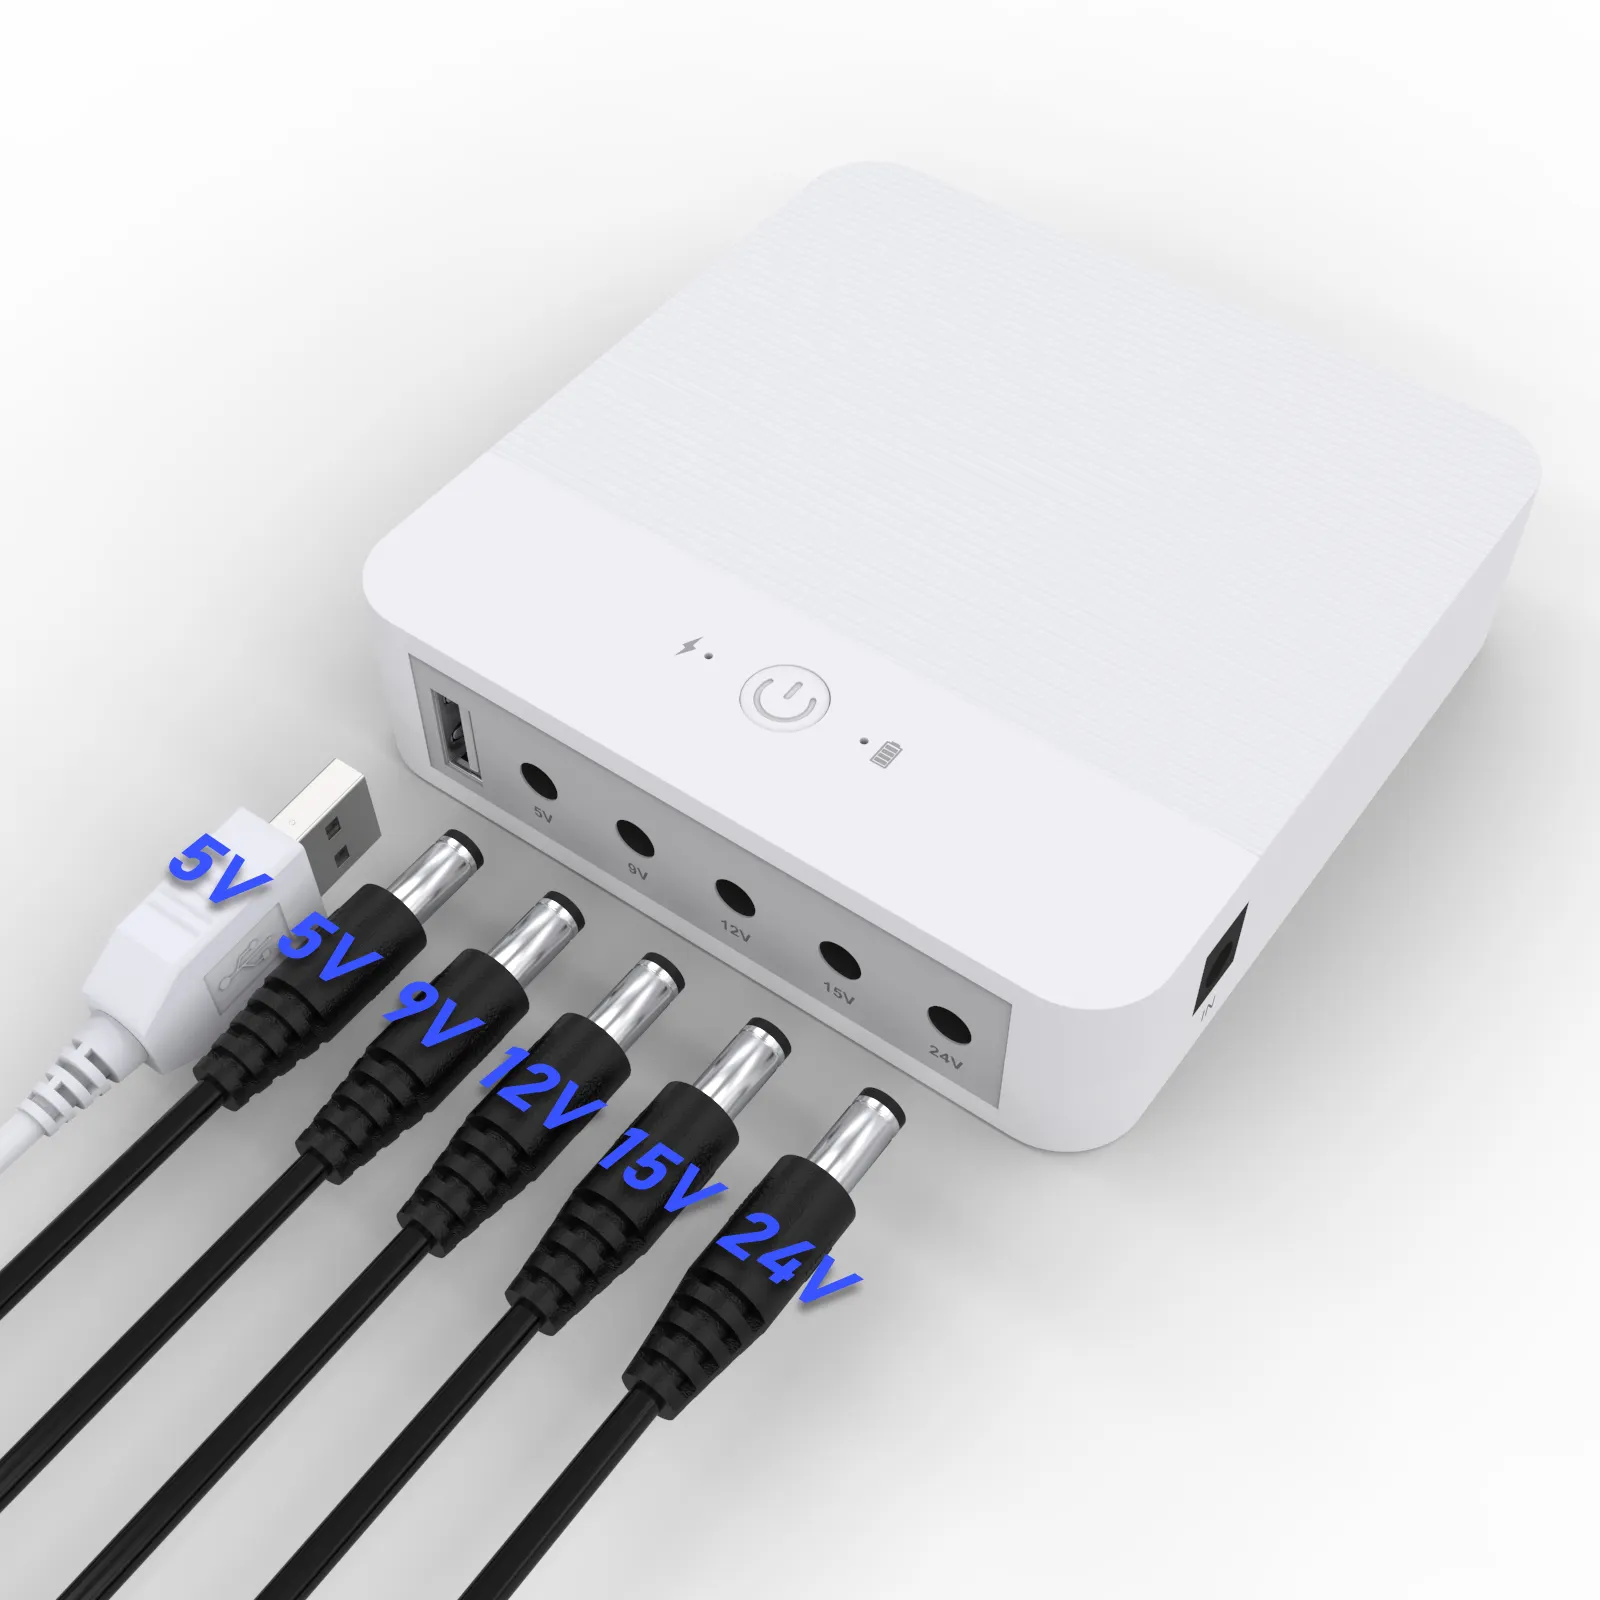 WGP OEM catu daya cadangan baterai portabel Online12V 24V DC UPS Mini untuk WiFi Router IP kamera Modem Router serat